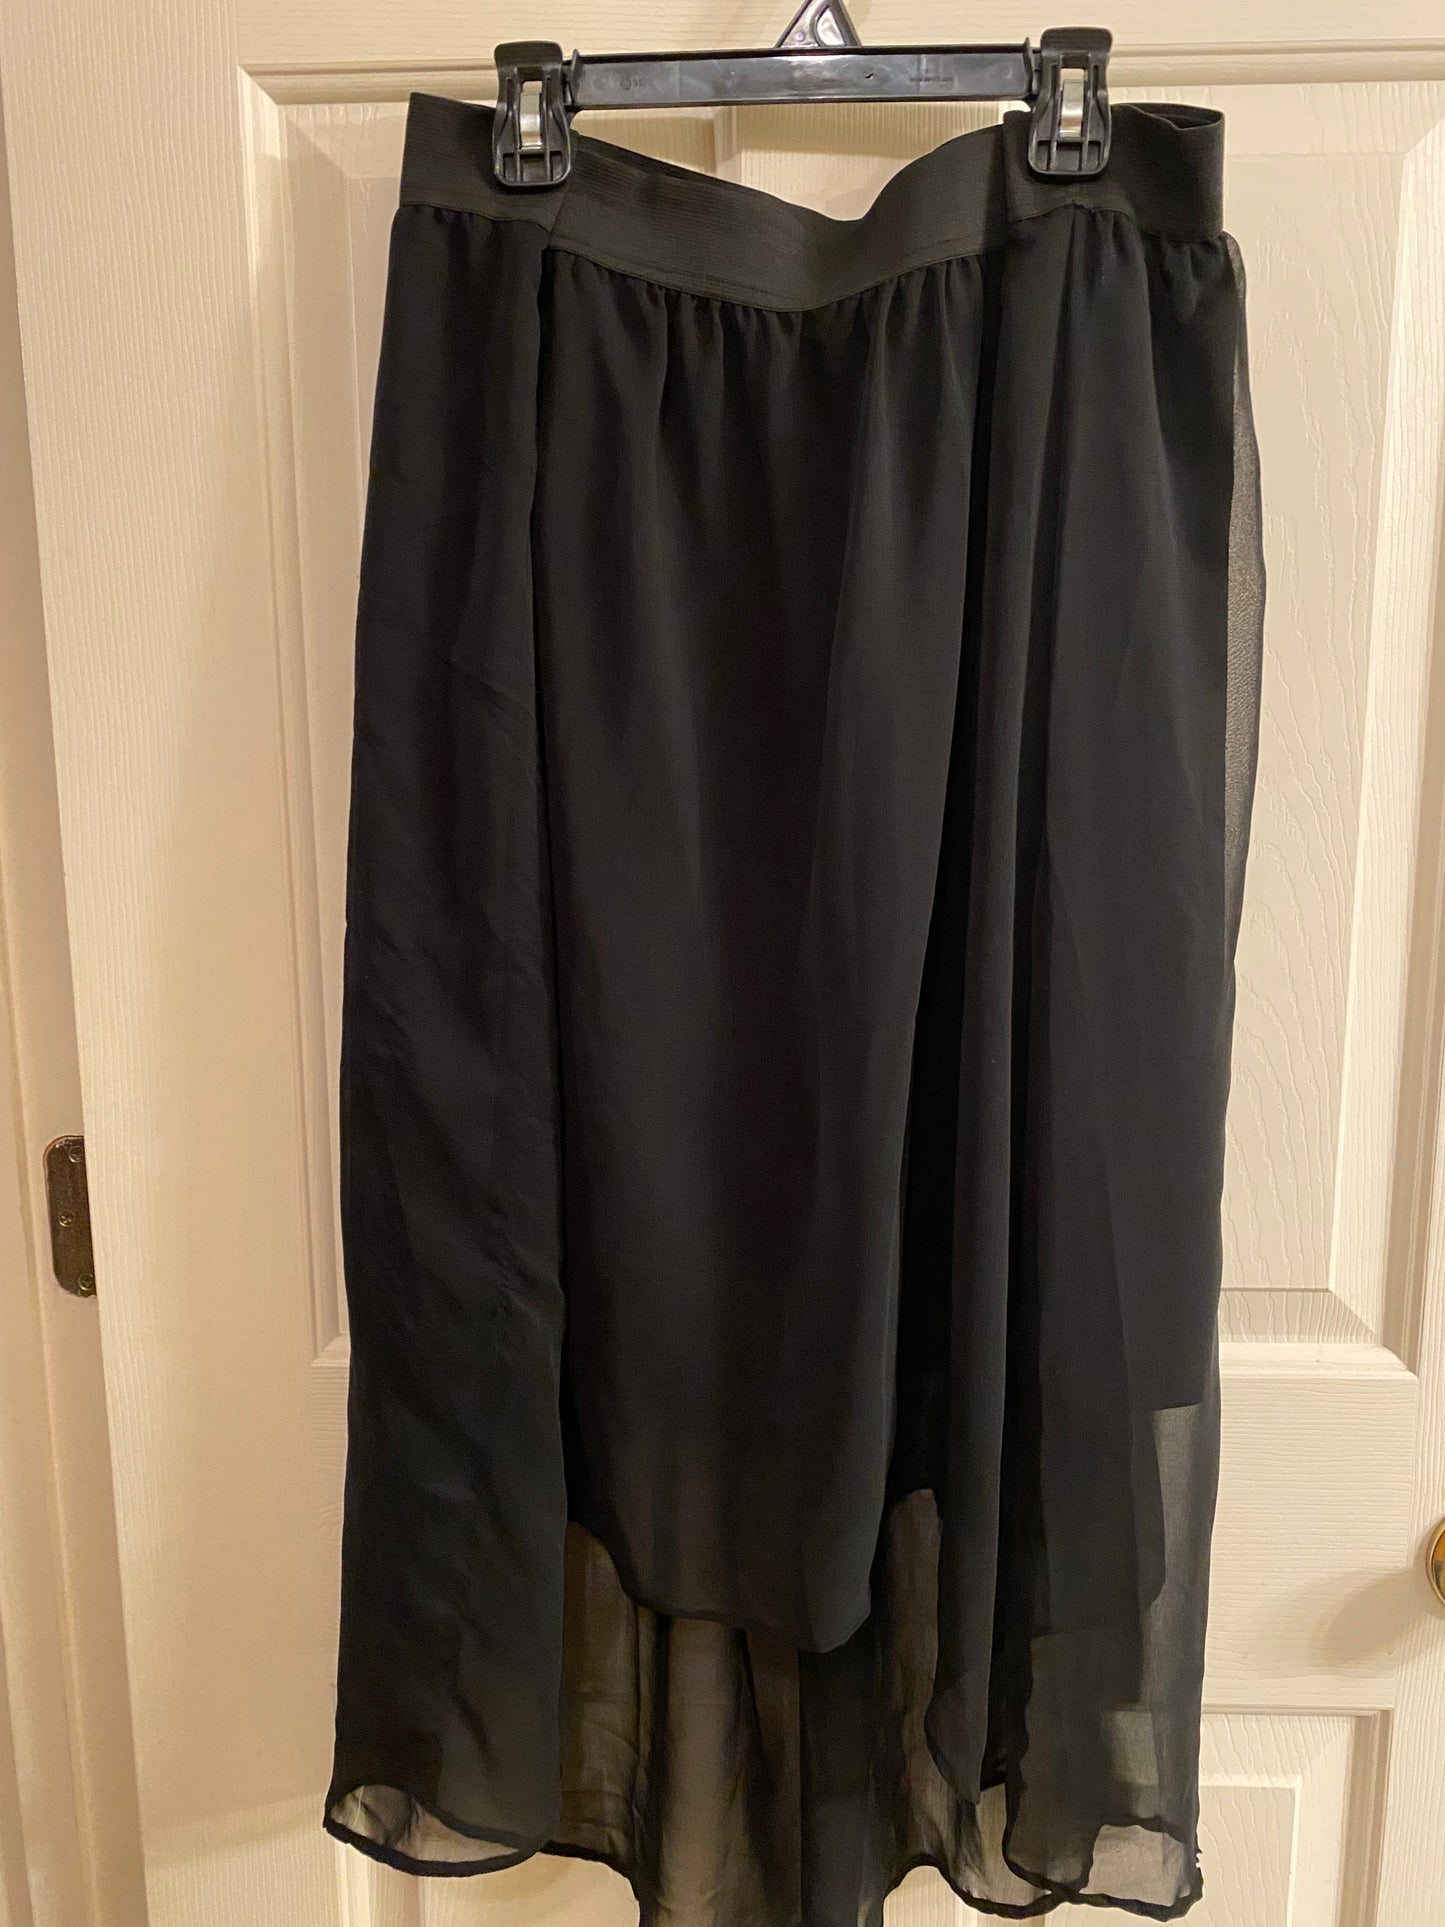 Apolo Dance Skirt Black Size 3x 100% polyester